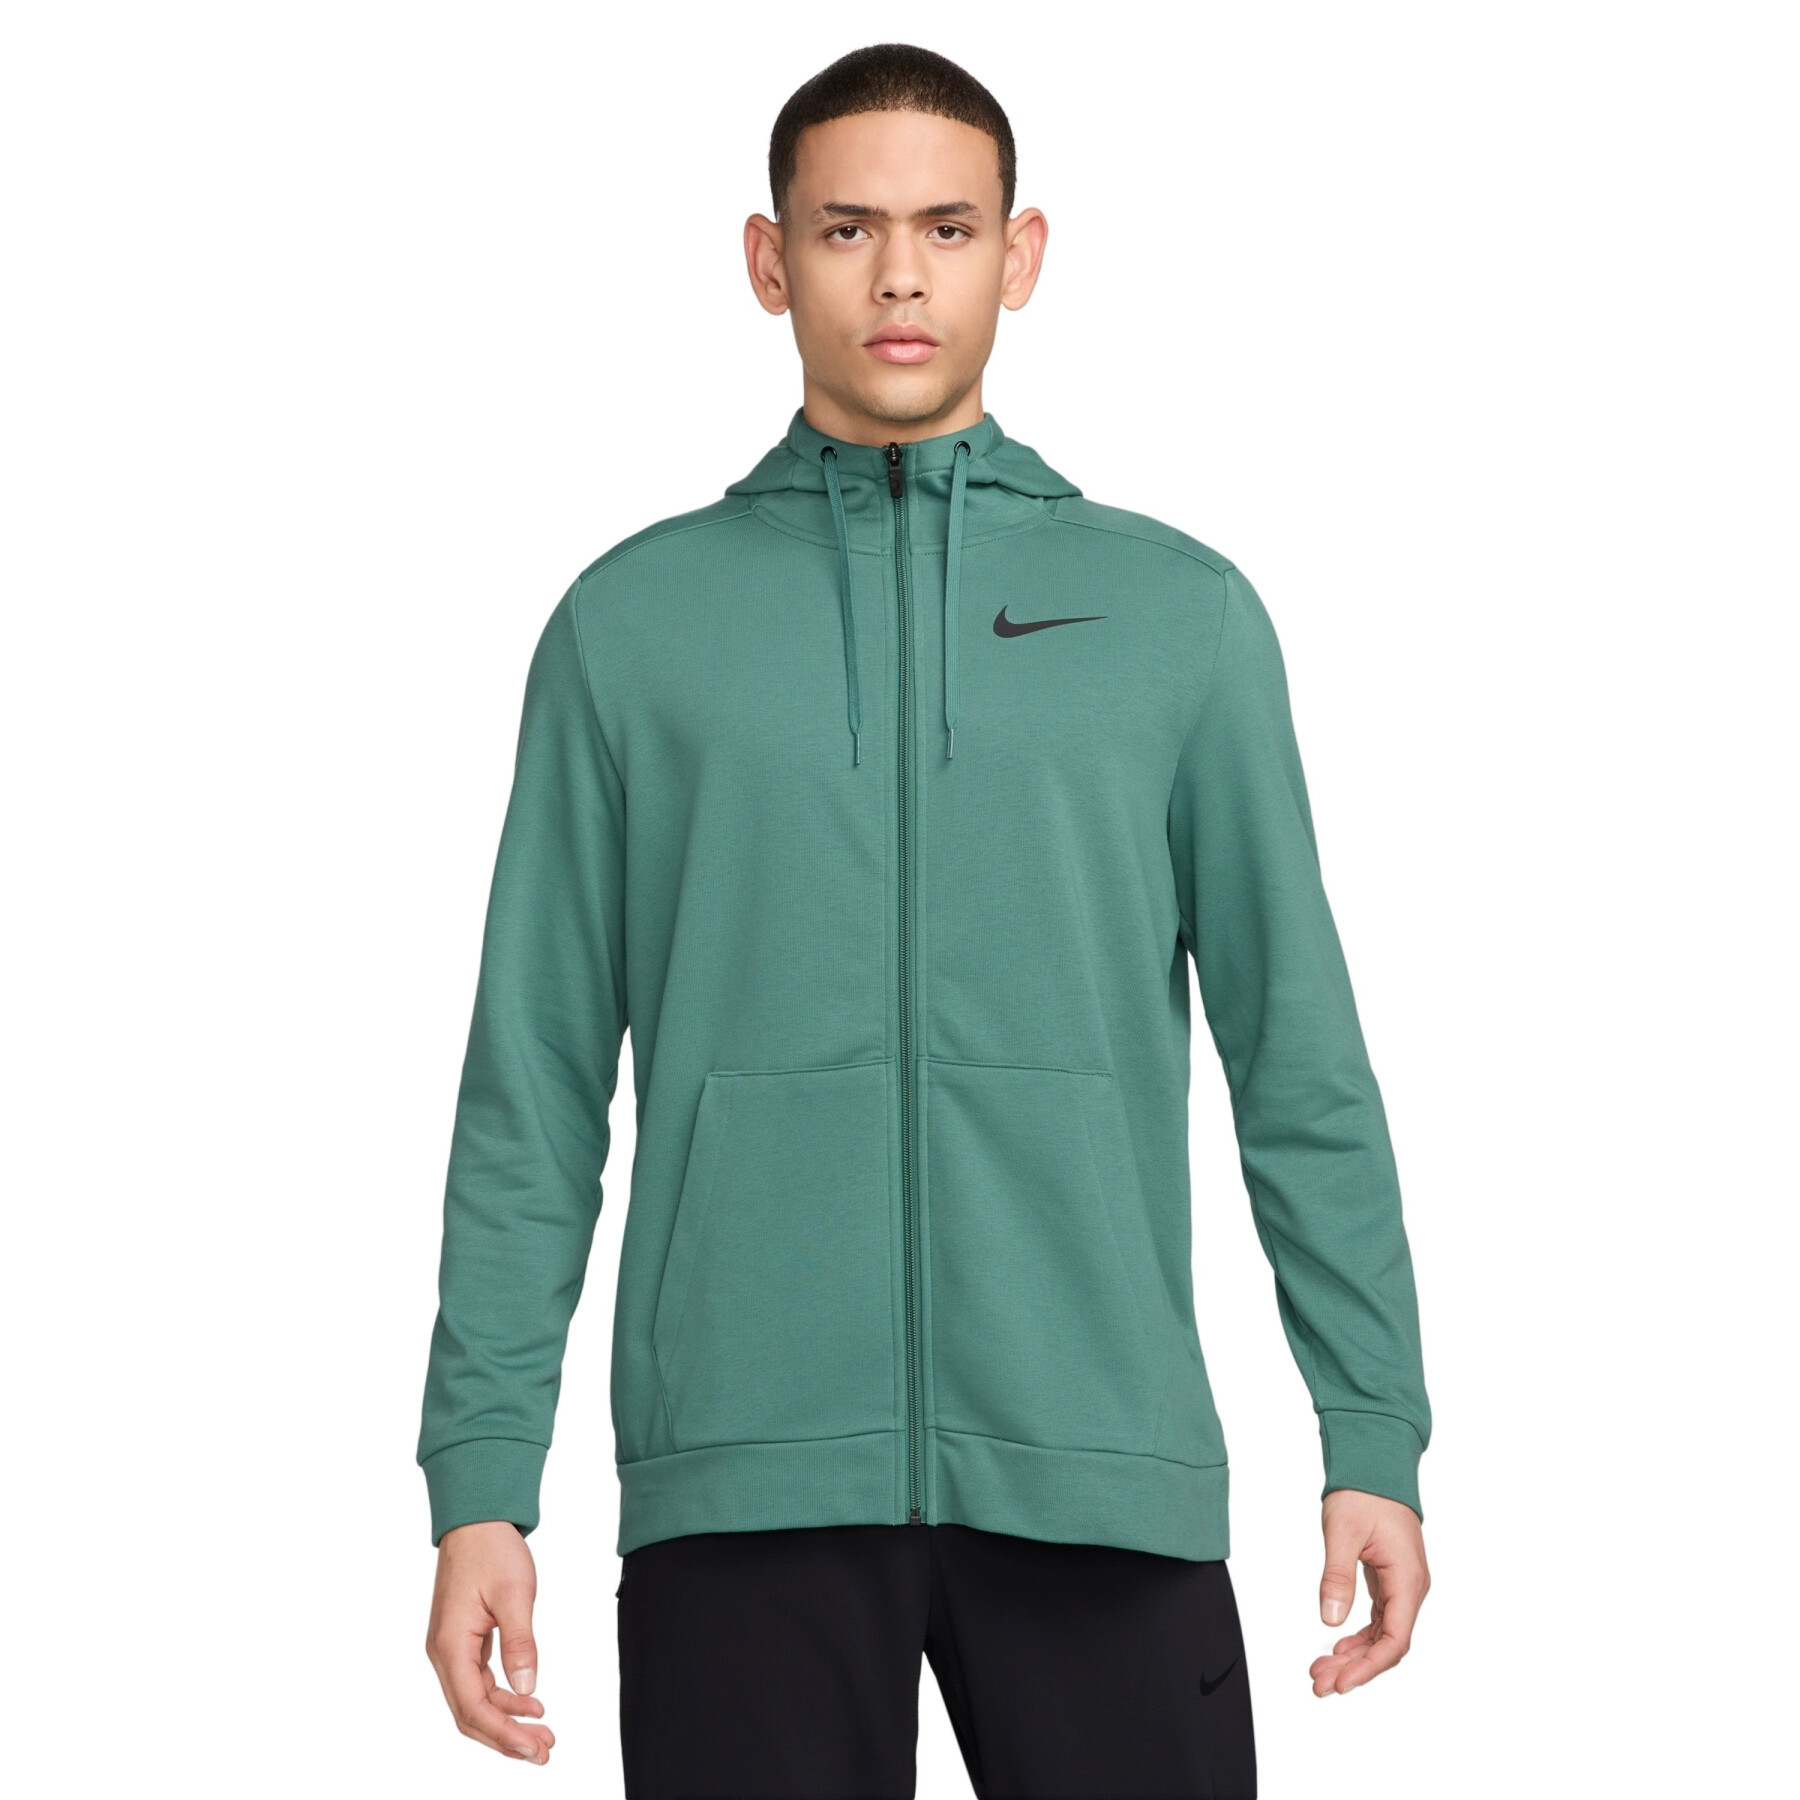 Sweatshirt à capuche zippé Nike Dri-FIT